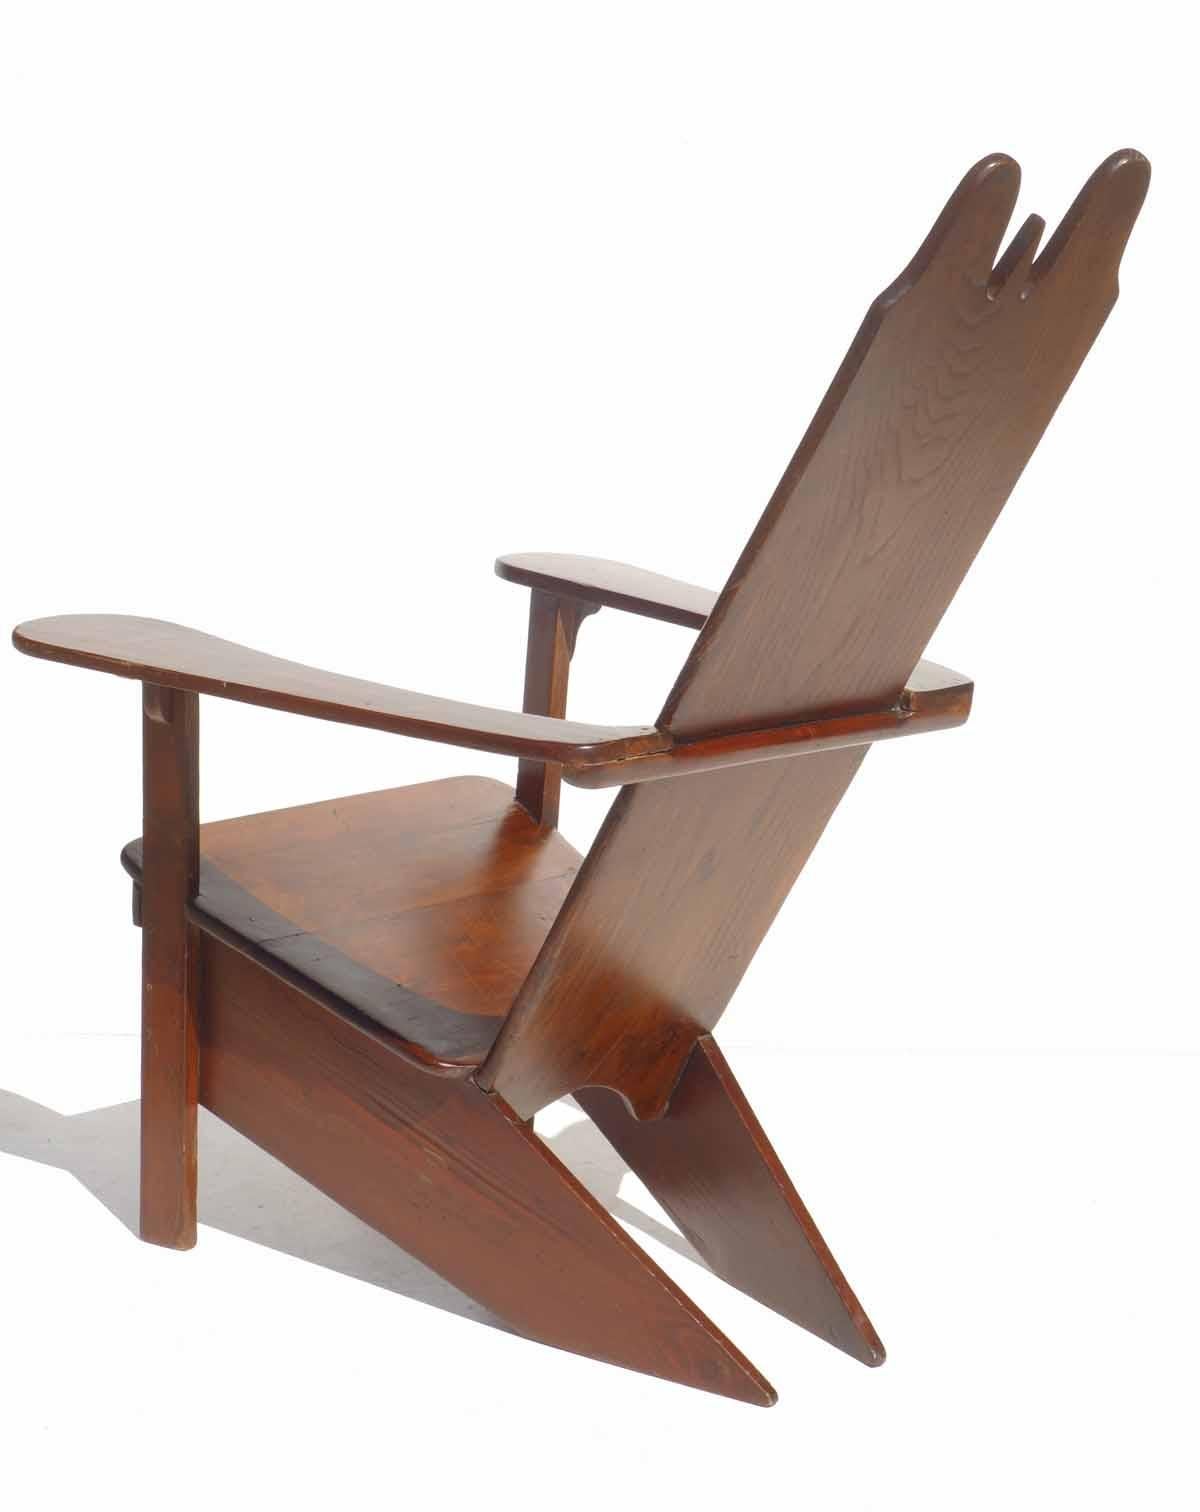 Rustic 1930s Gino Levi Montalcini Italian Design Rationalist Wood Lounge Chair For Sale